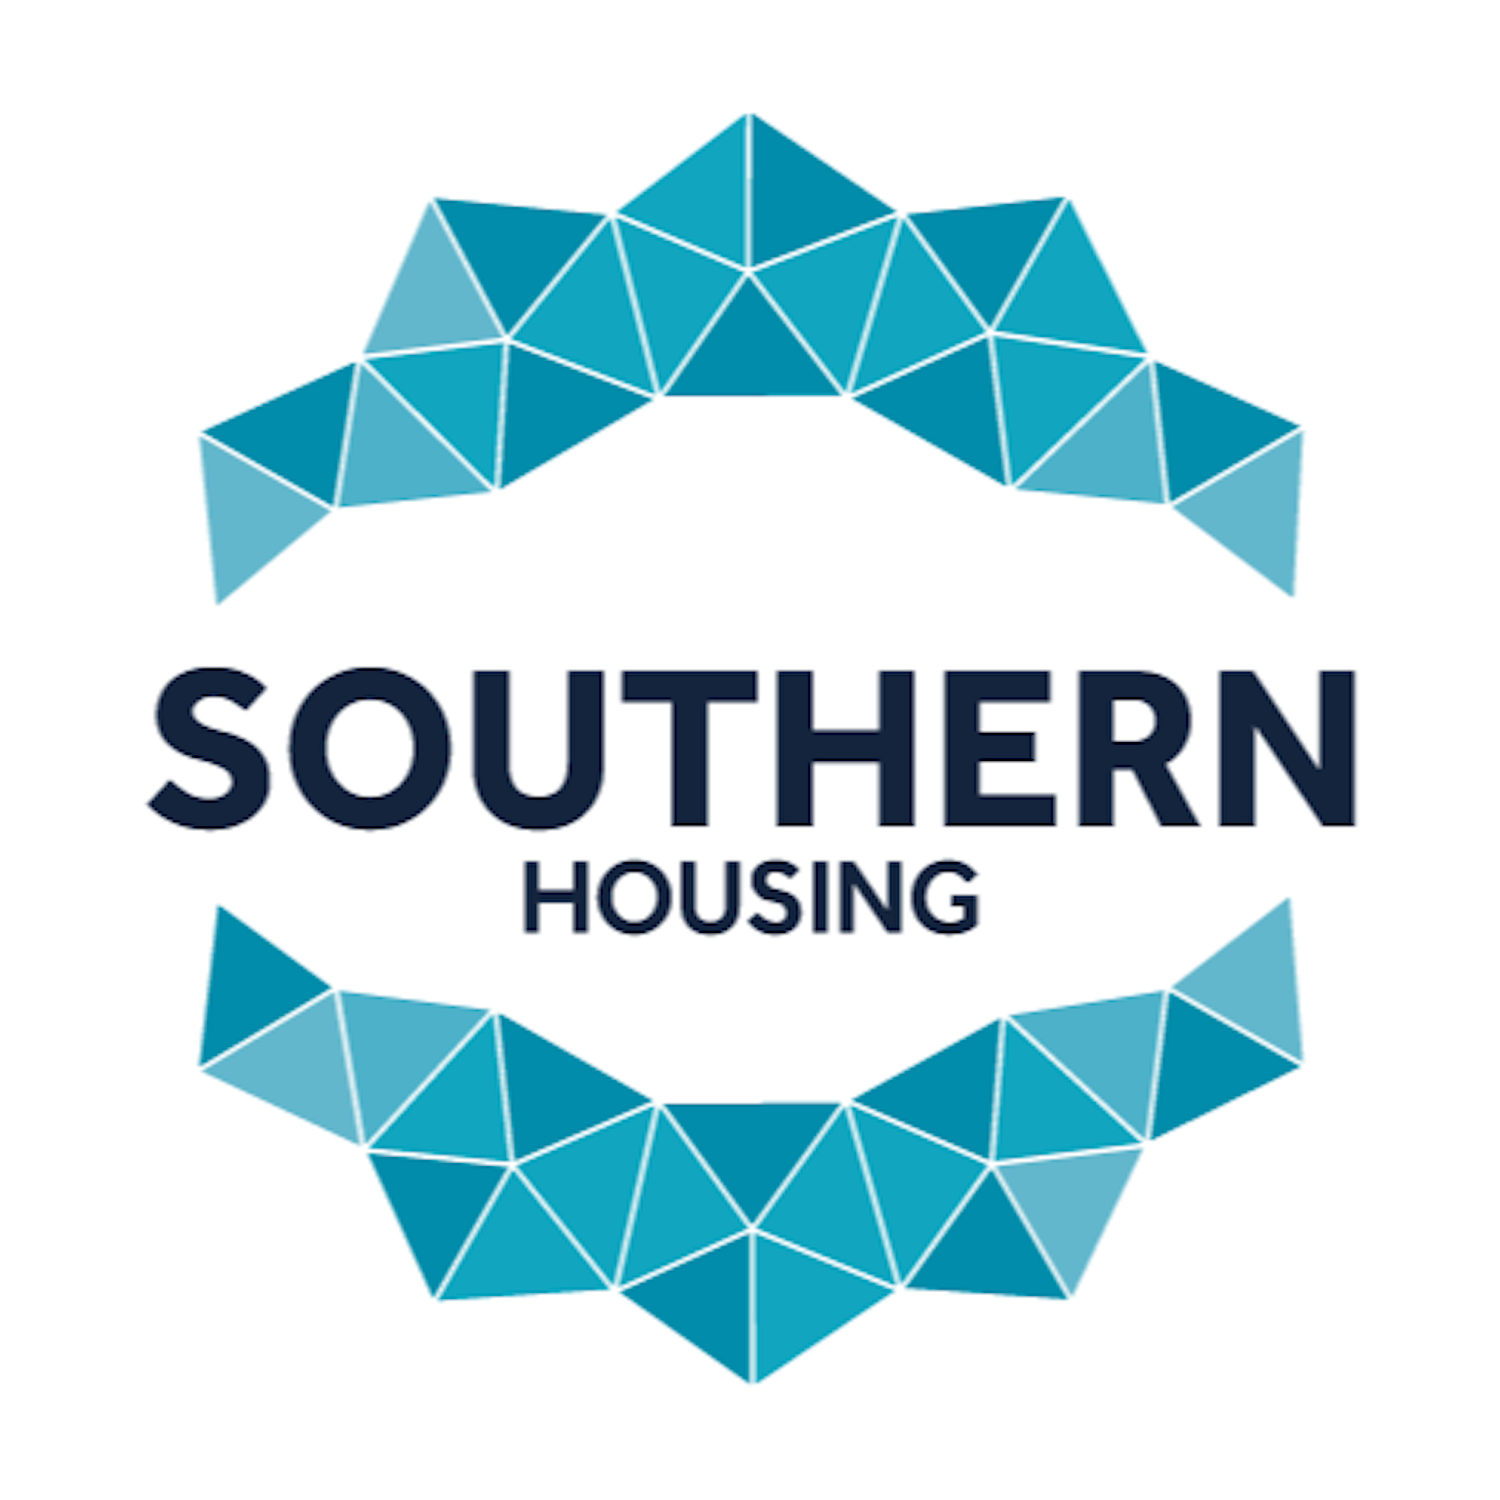 engagement@southernhousing.org.uk